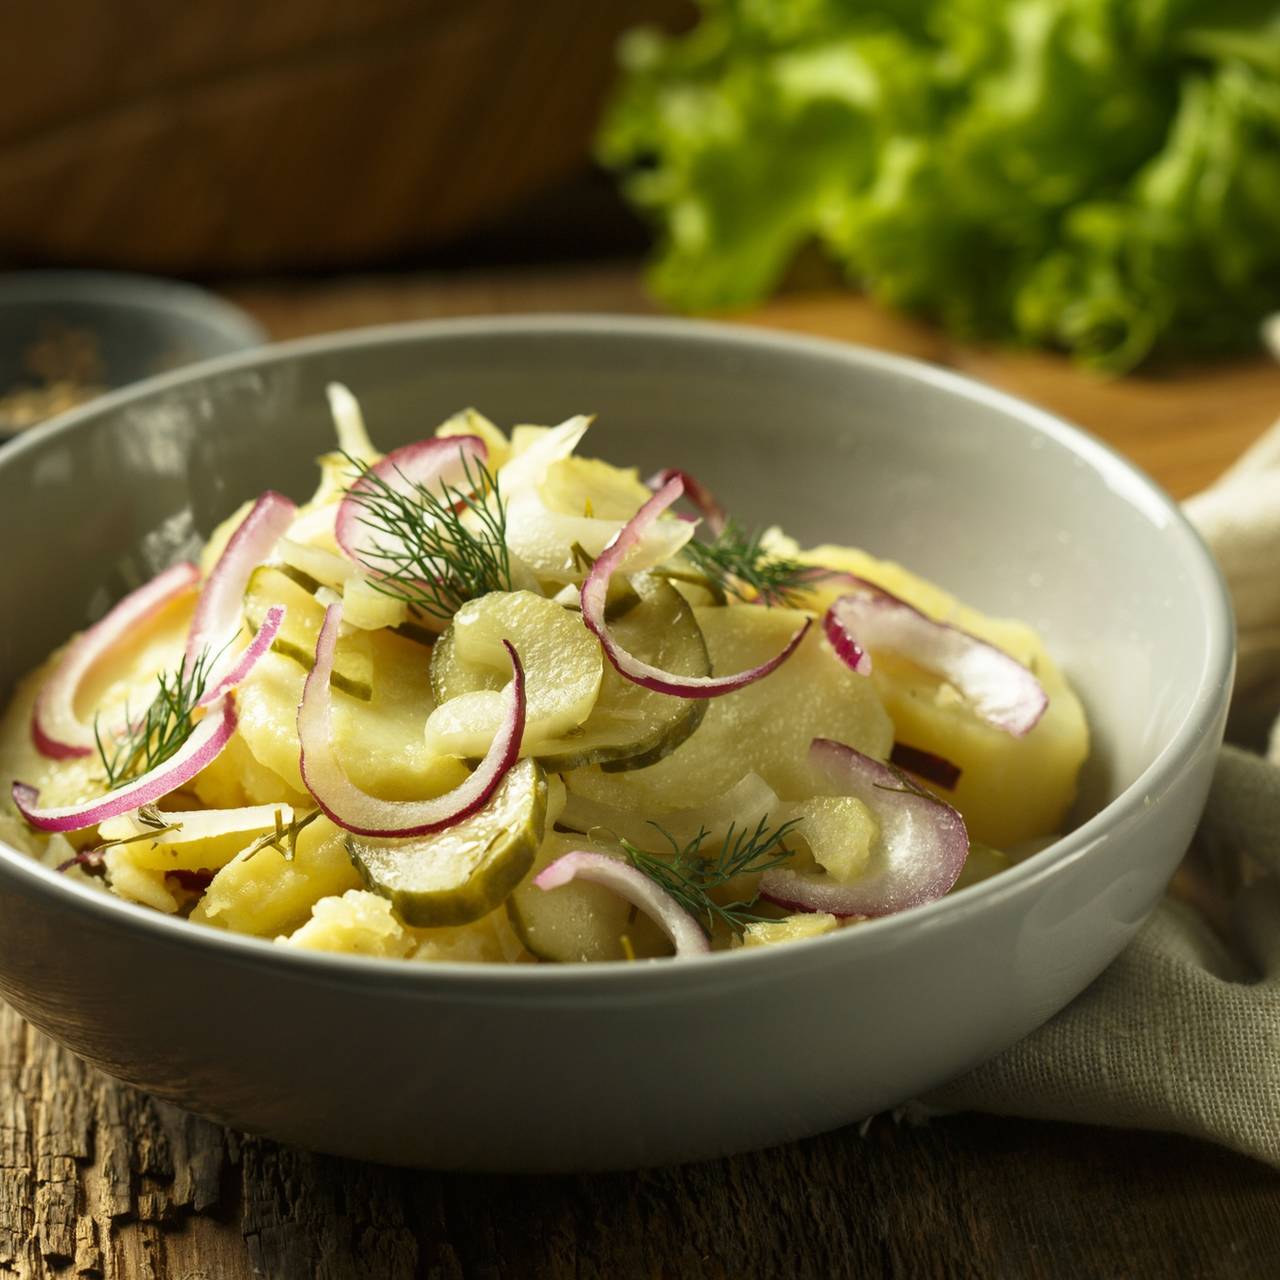  Kartoffelsalat Hintergrundbild 1280x1280. Kartoffelsalat mal anders: Mit diesem Rezept wird der Klassiker vegan FOR FUN